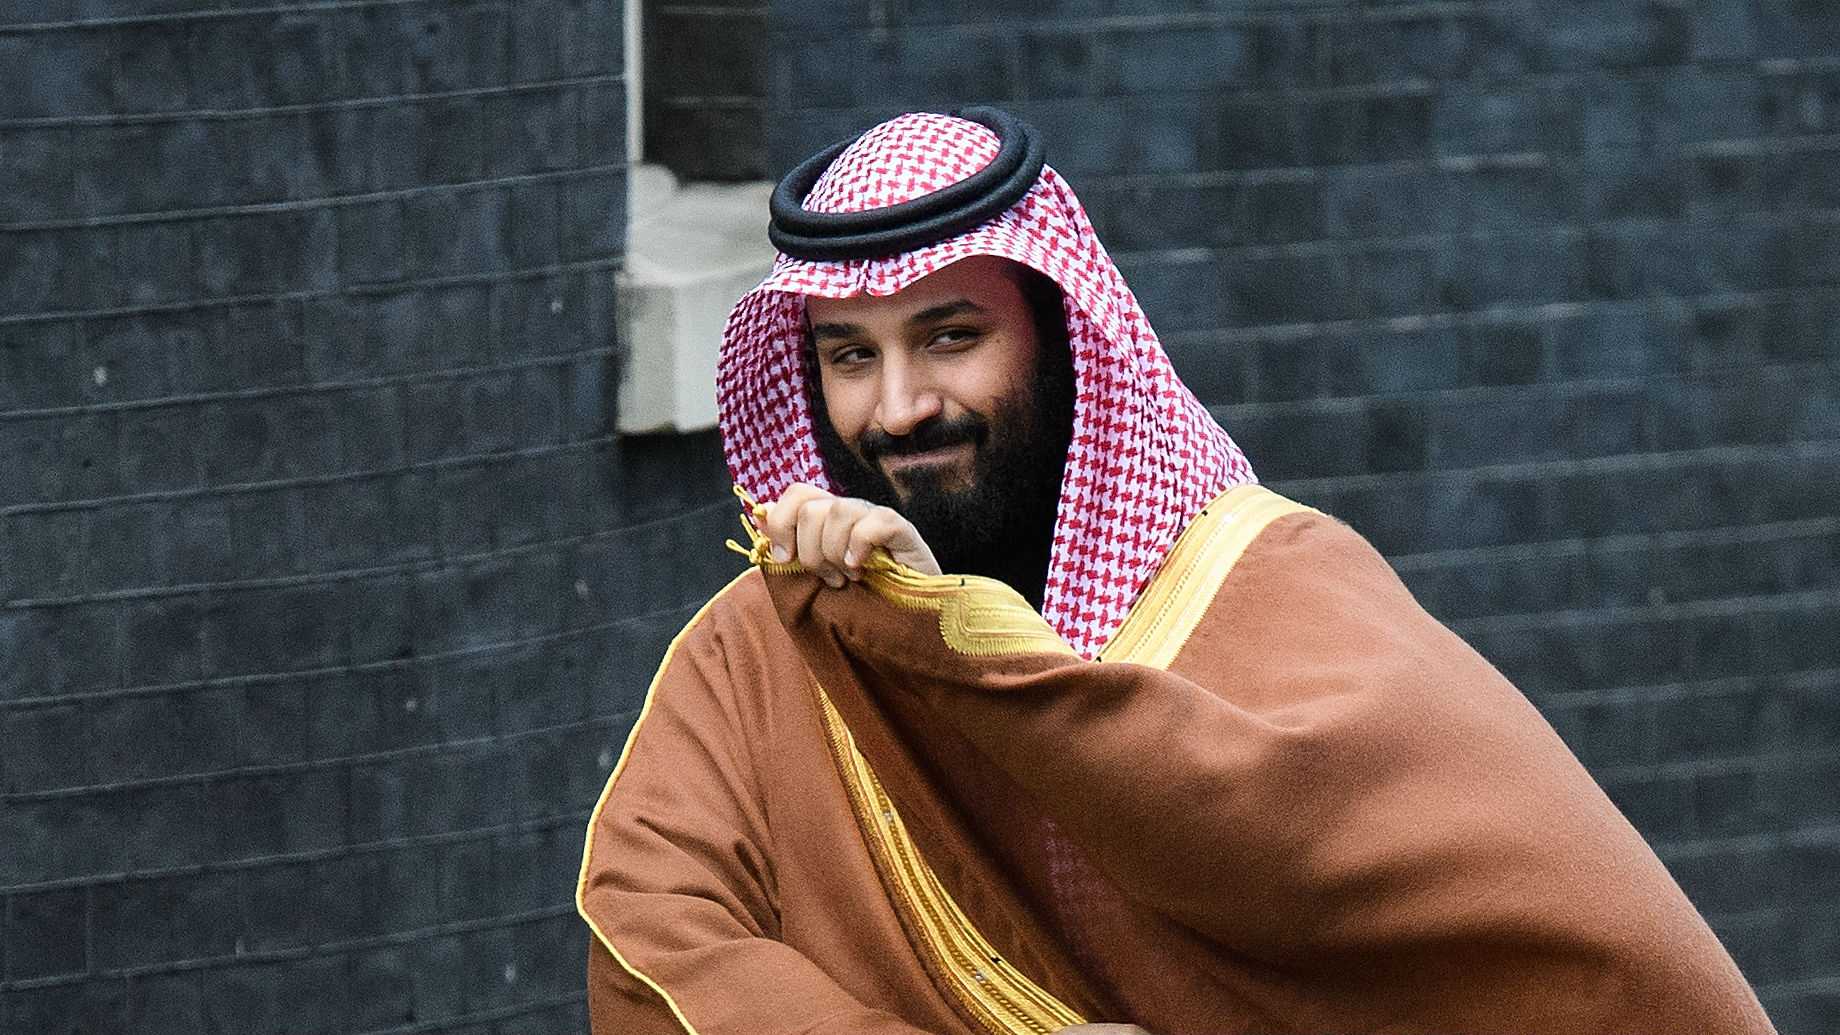 Mohammed bin Salman, the crown prince of Saudi Arabia